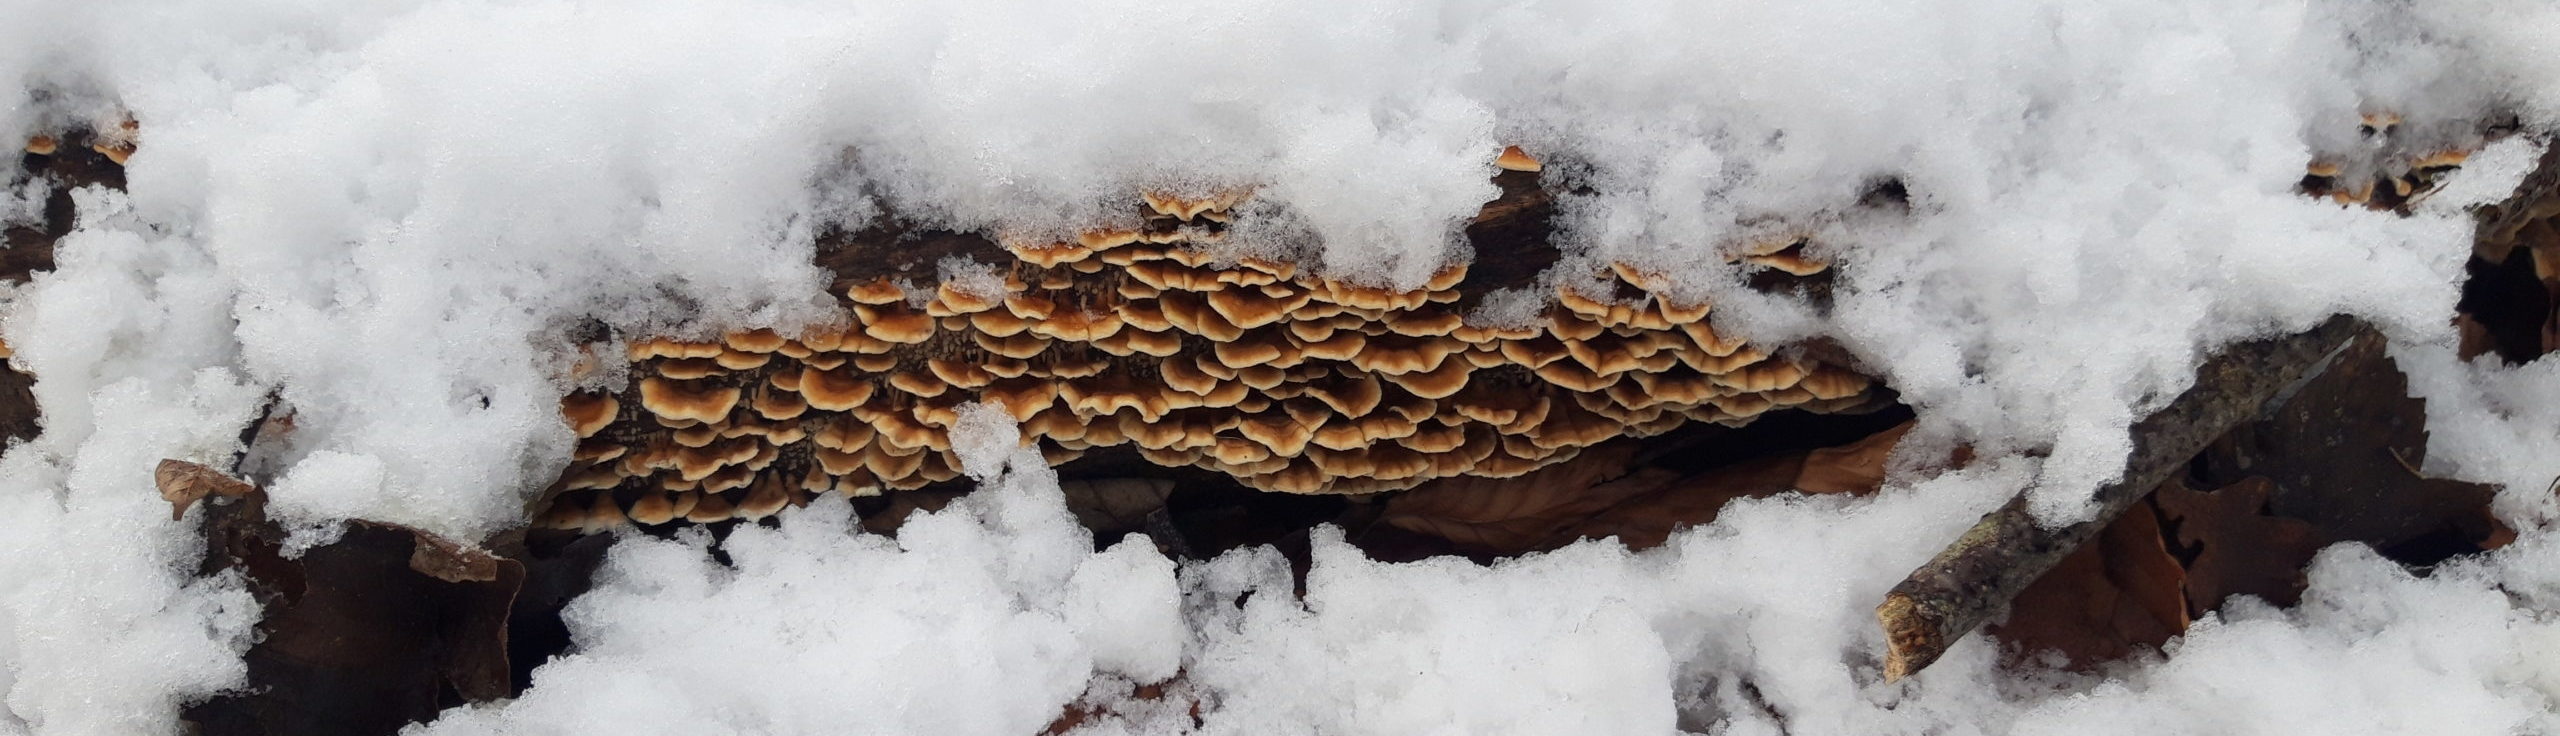 Pilze unter Schnee